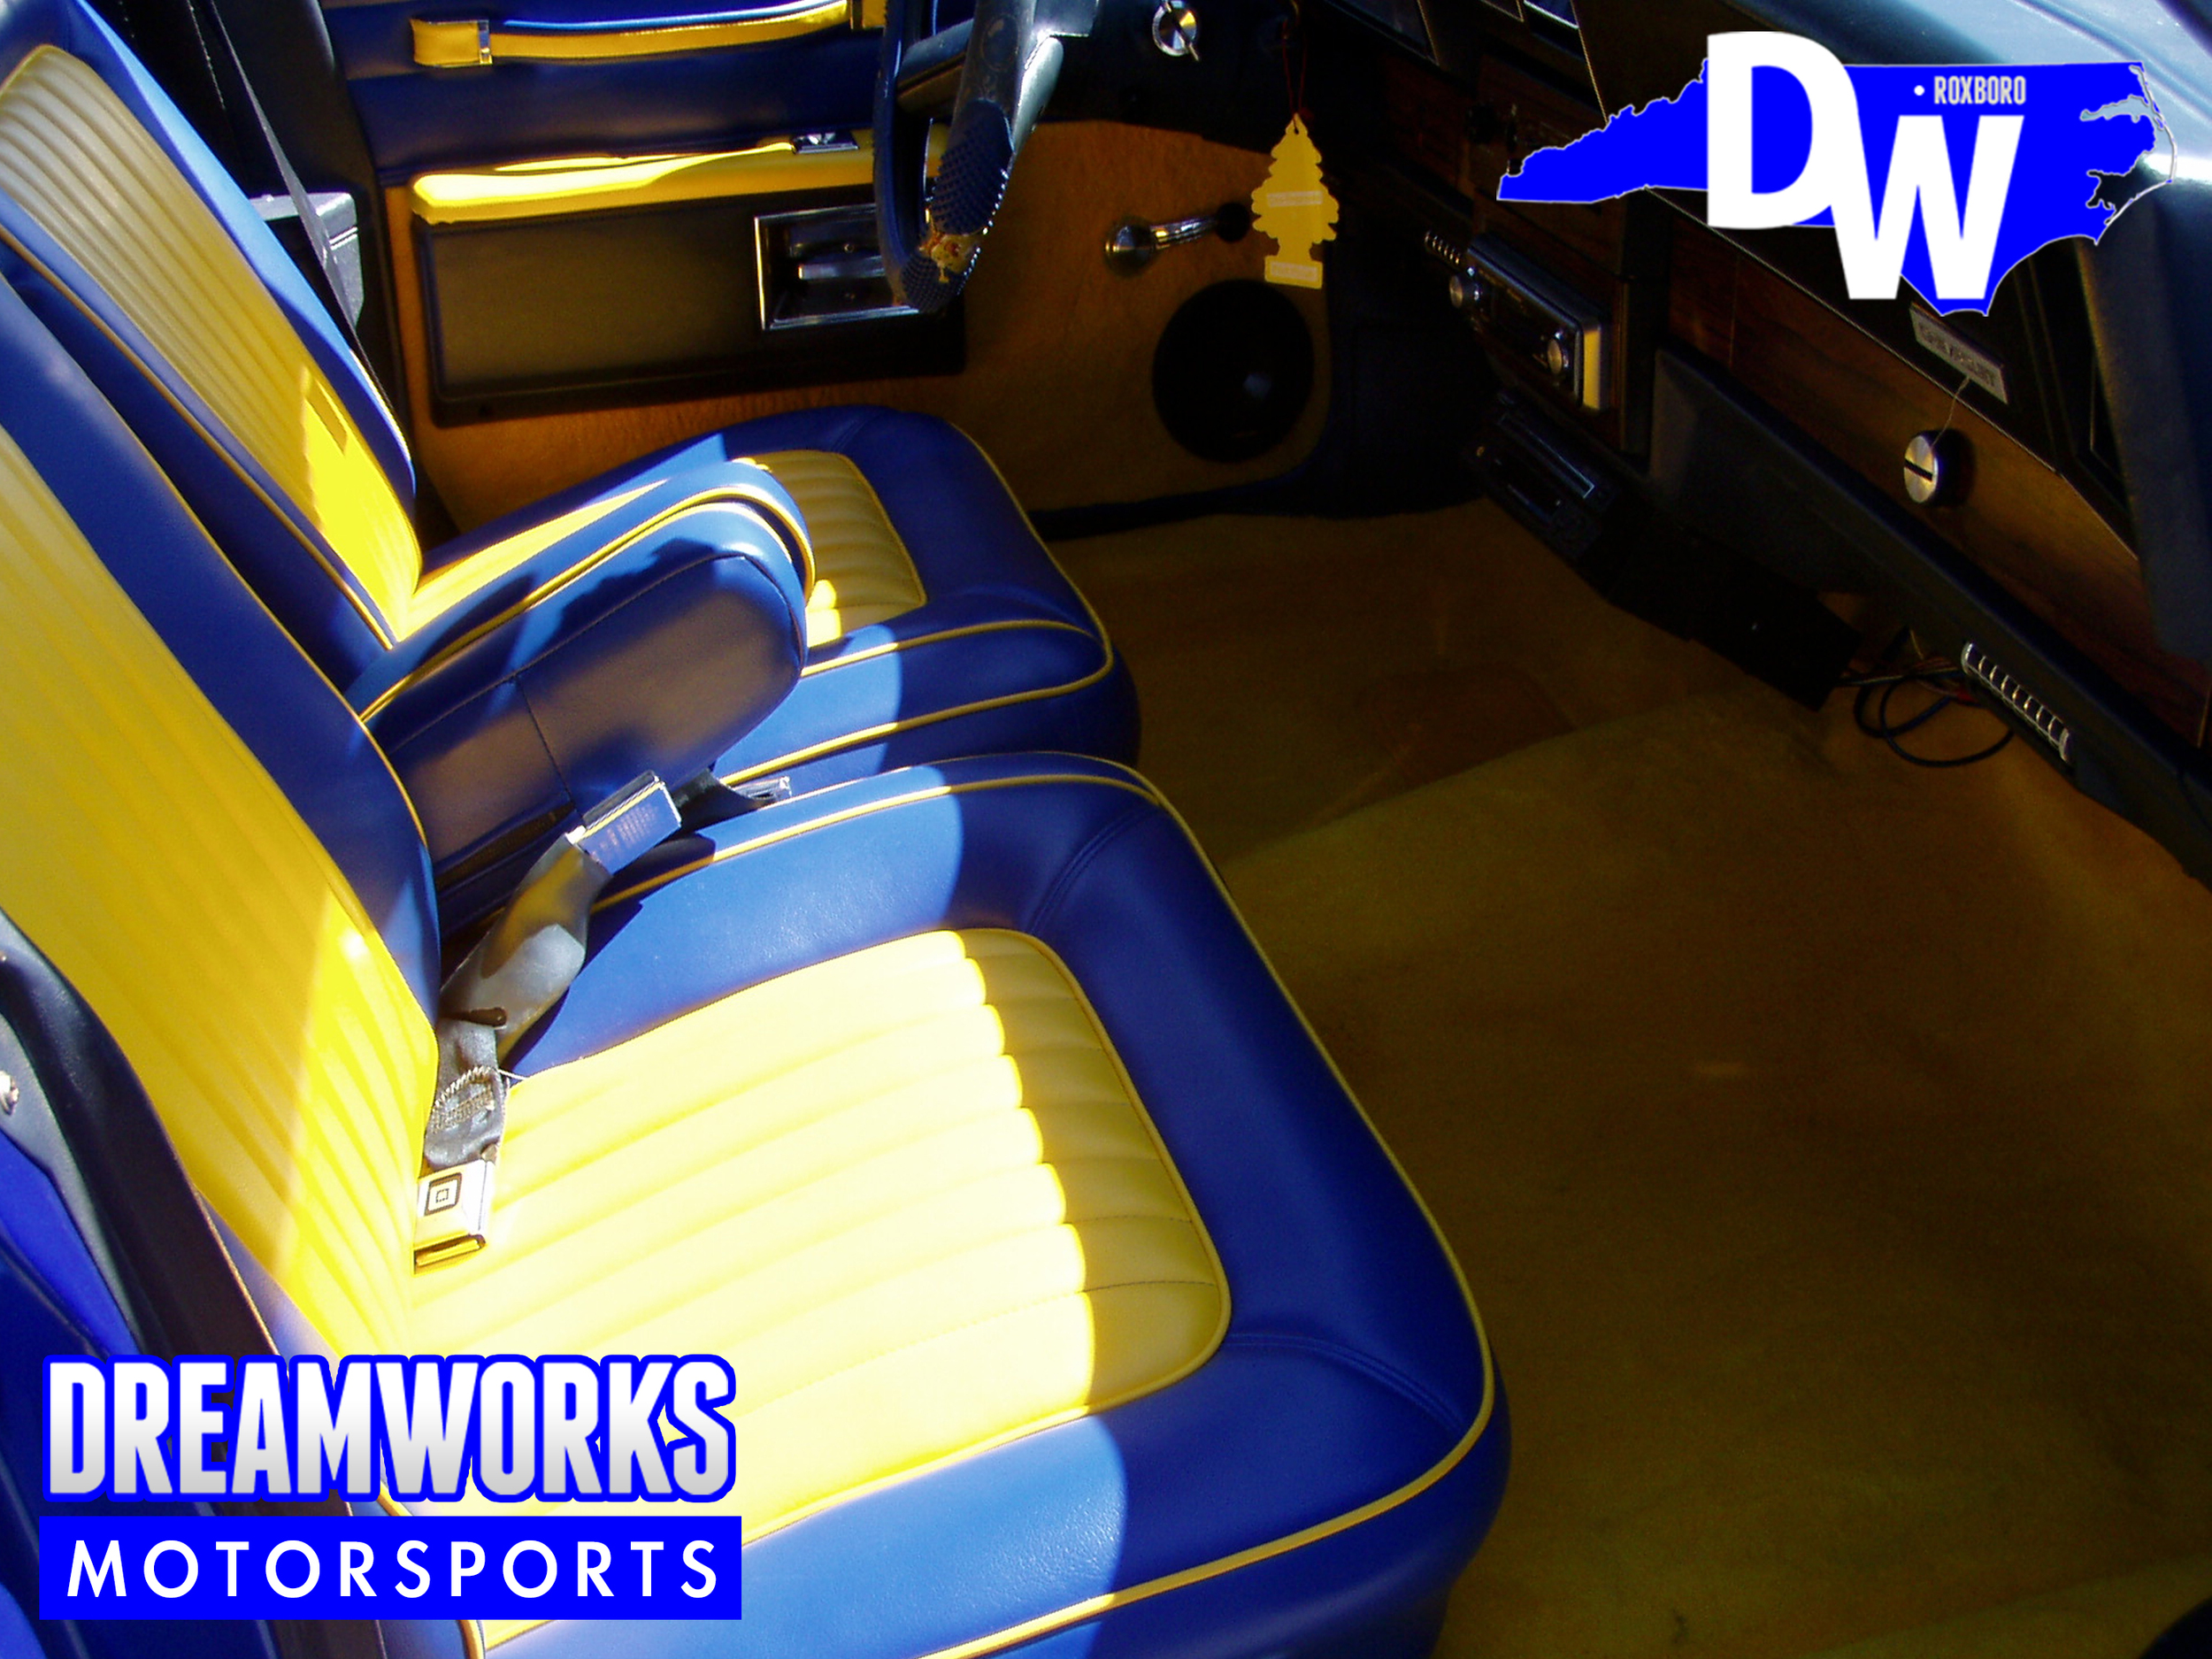 Chevrolet-Caprice-Spongebob-Dreamworks-Motorsports-4.jpg